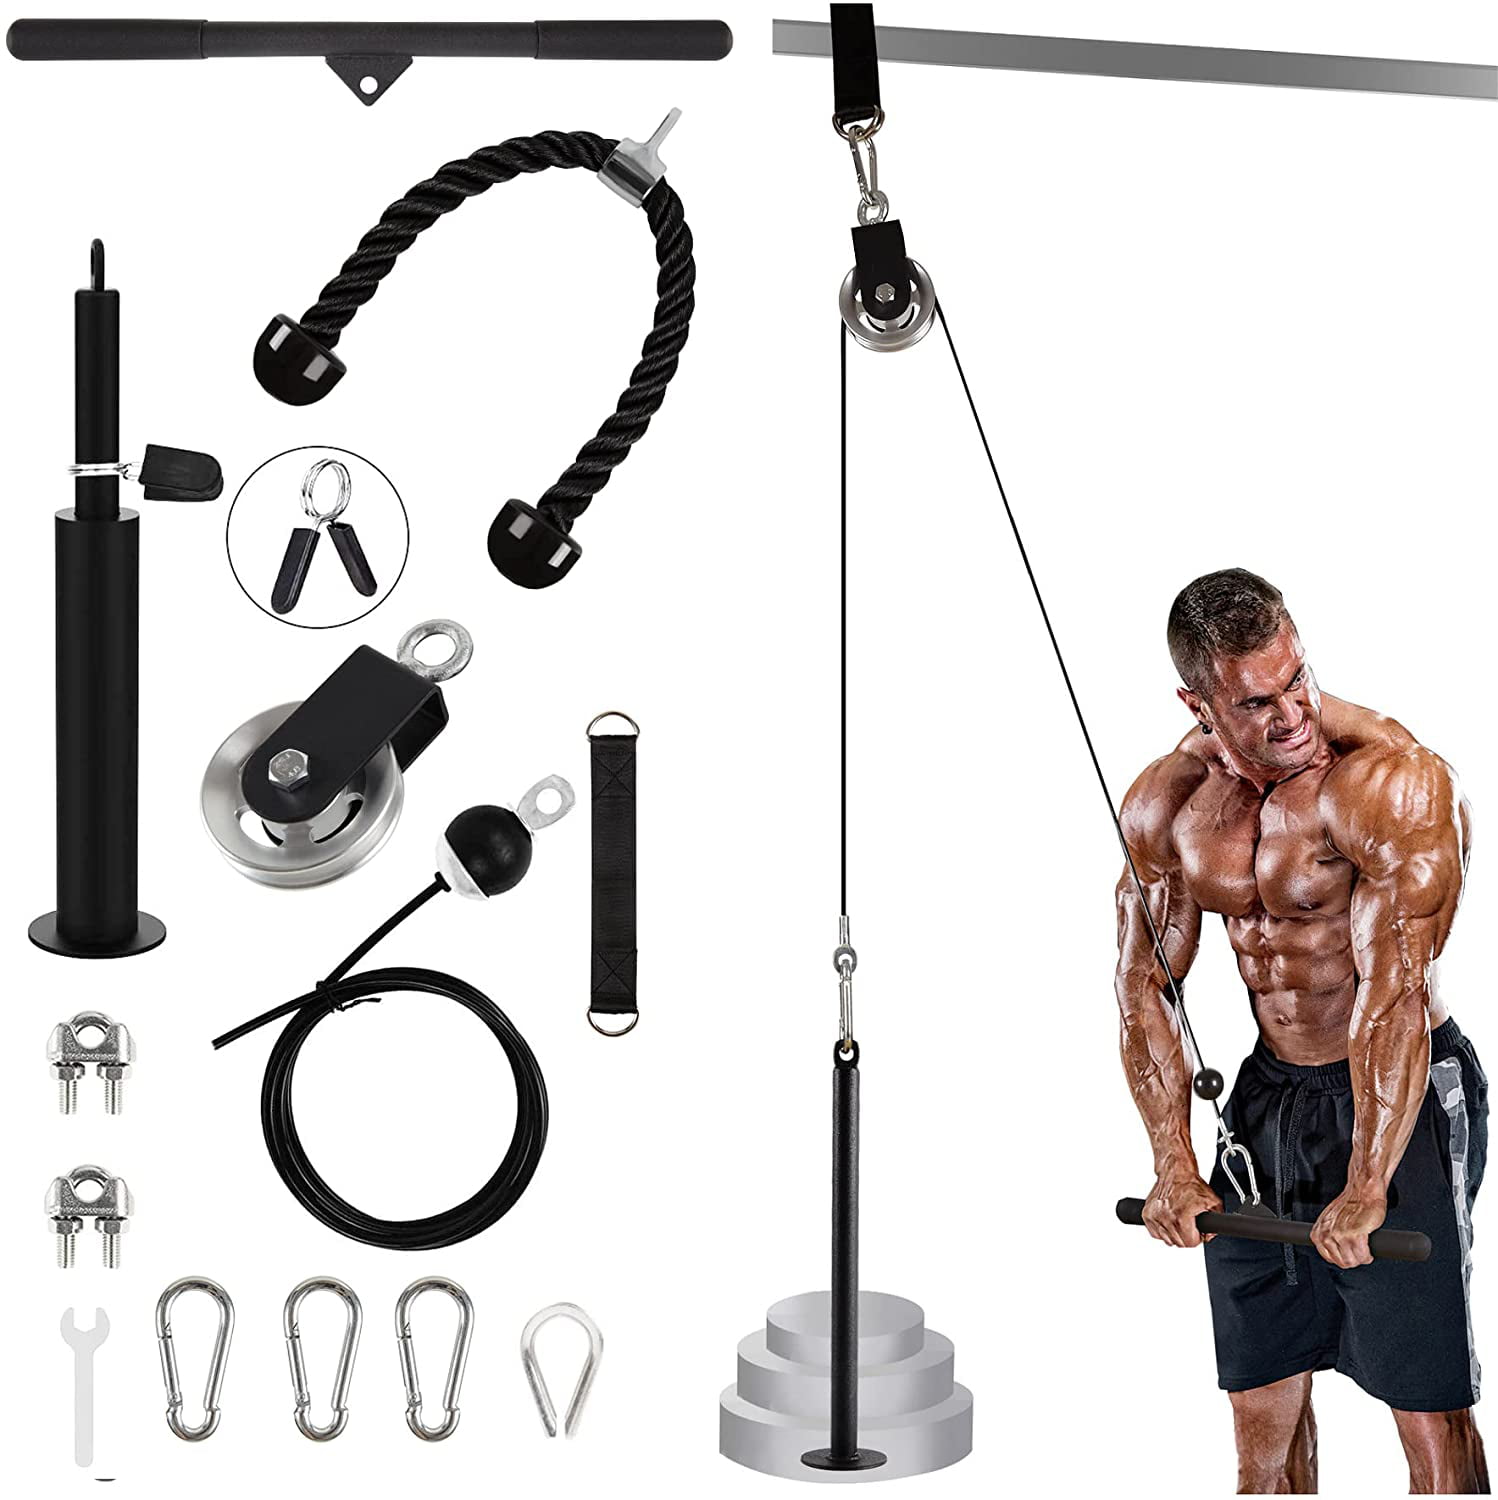 Fitness Training Loading Pin Triceps Pushdown Gym Equipment LAT Pulldown Machine 